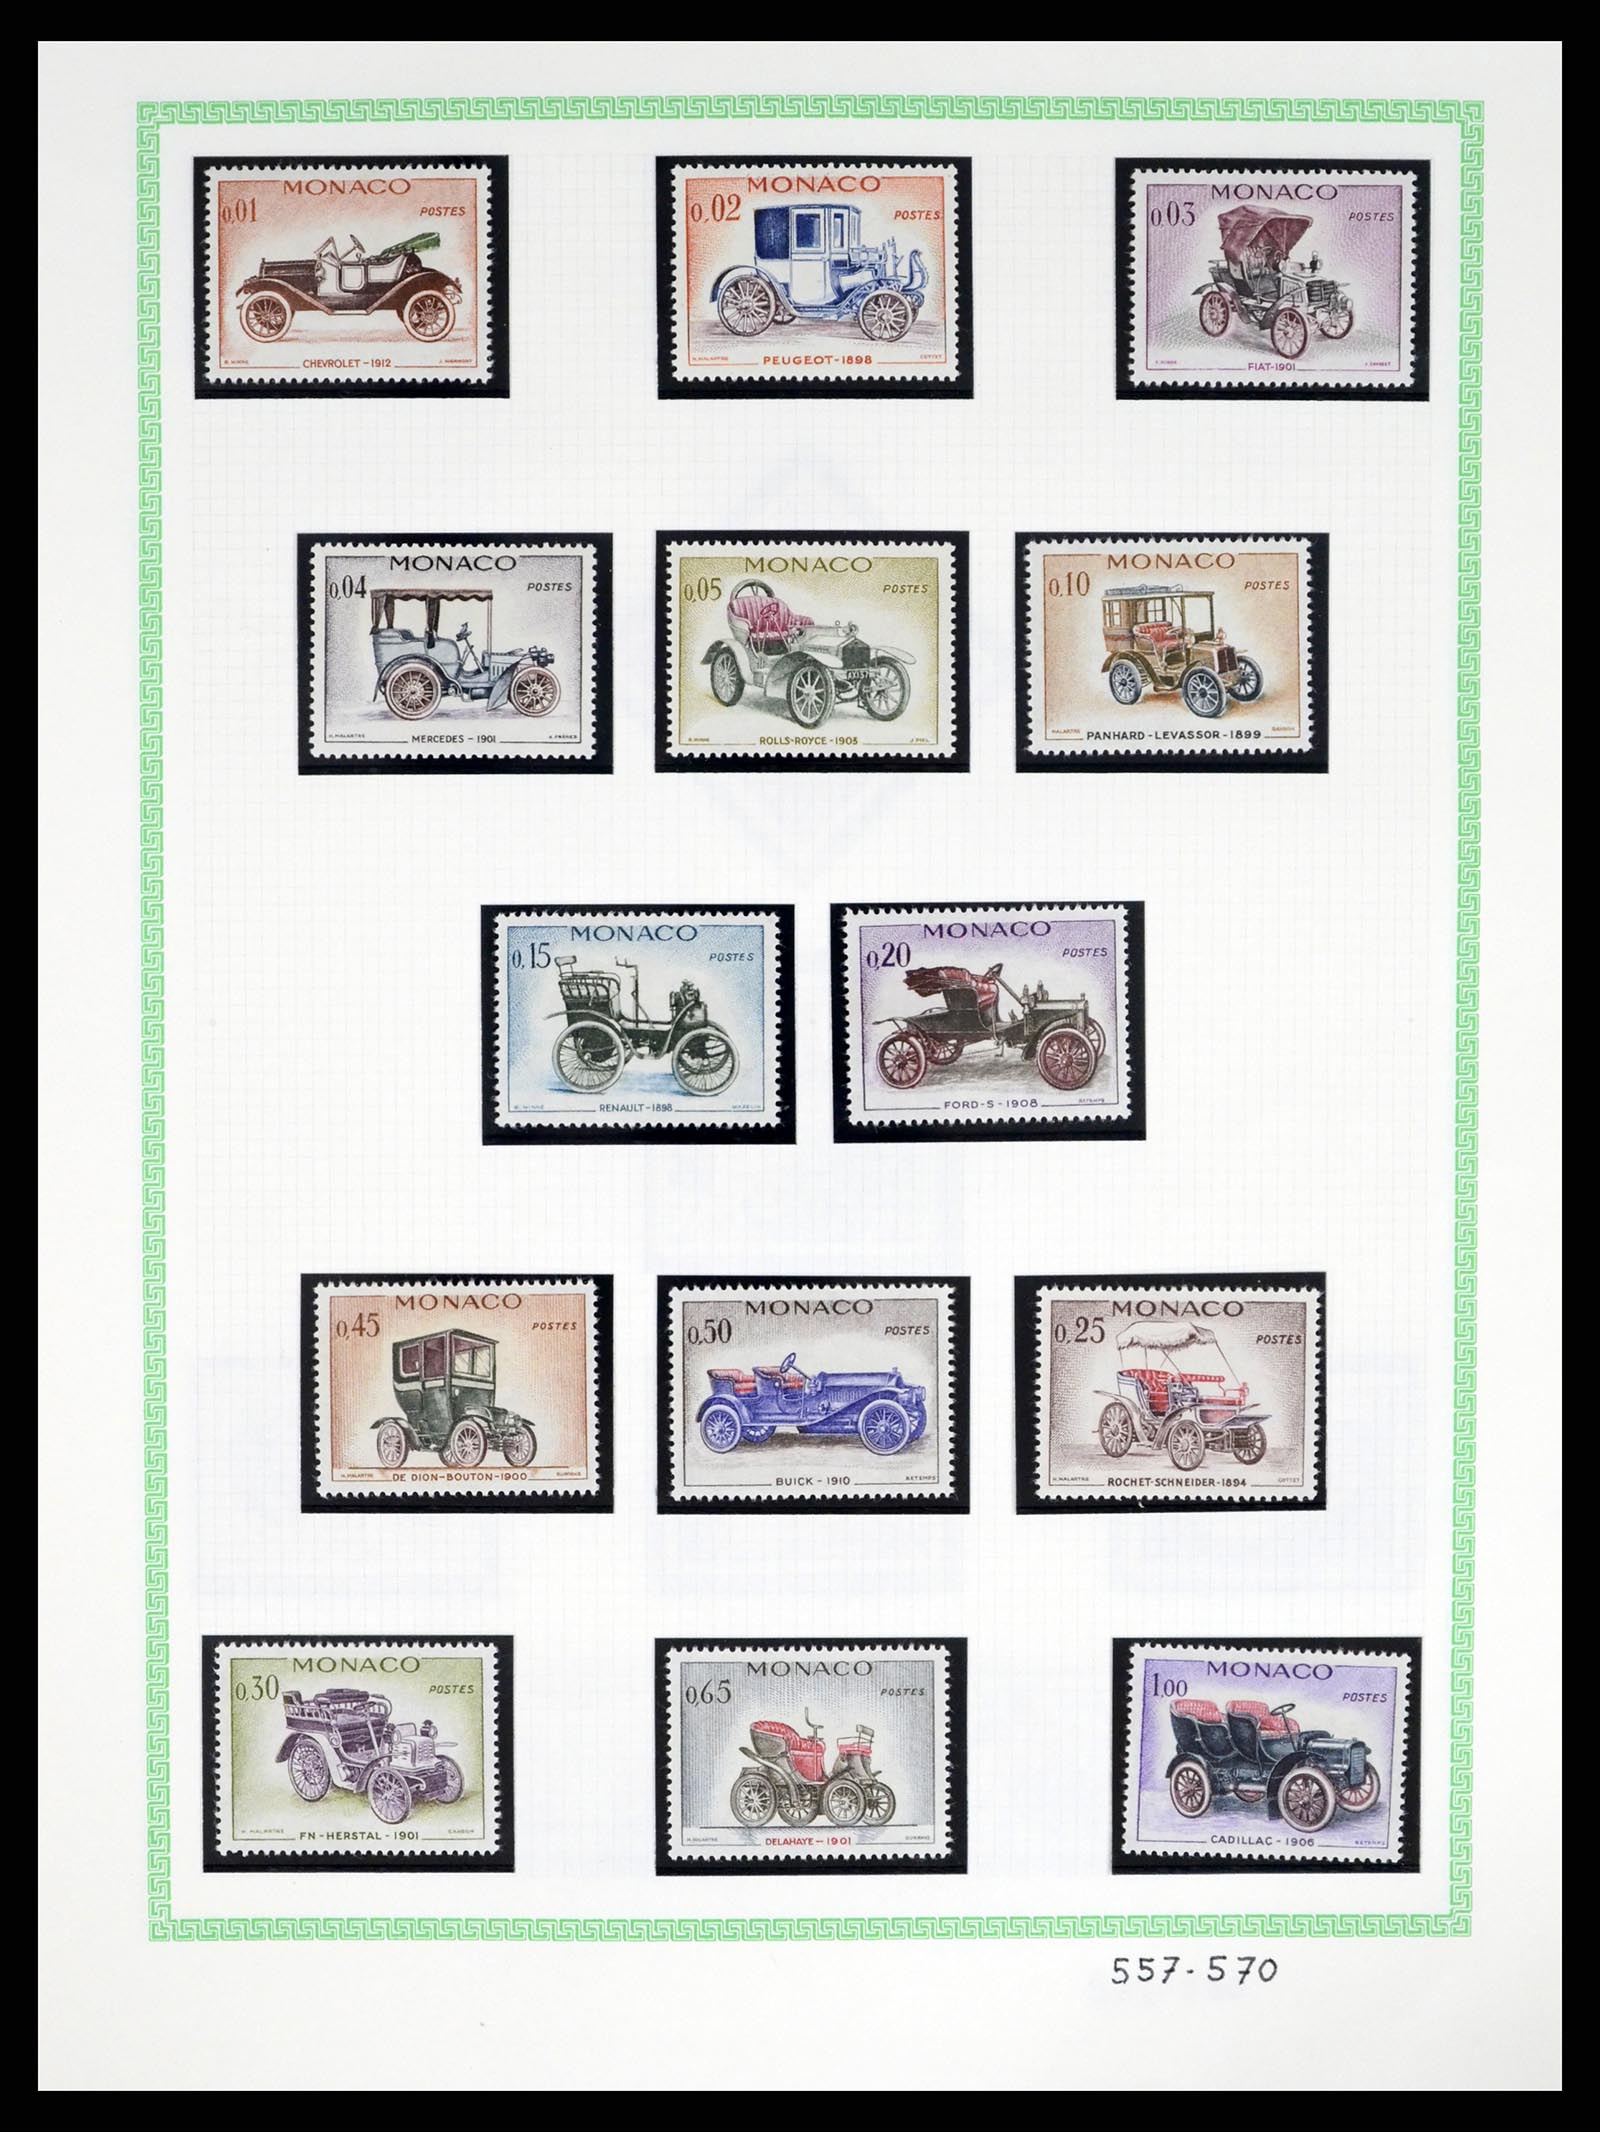 37380 051 - Stamp collection 37380 Monaco 1921-2015.